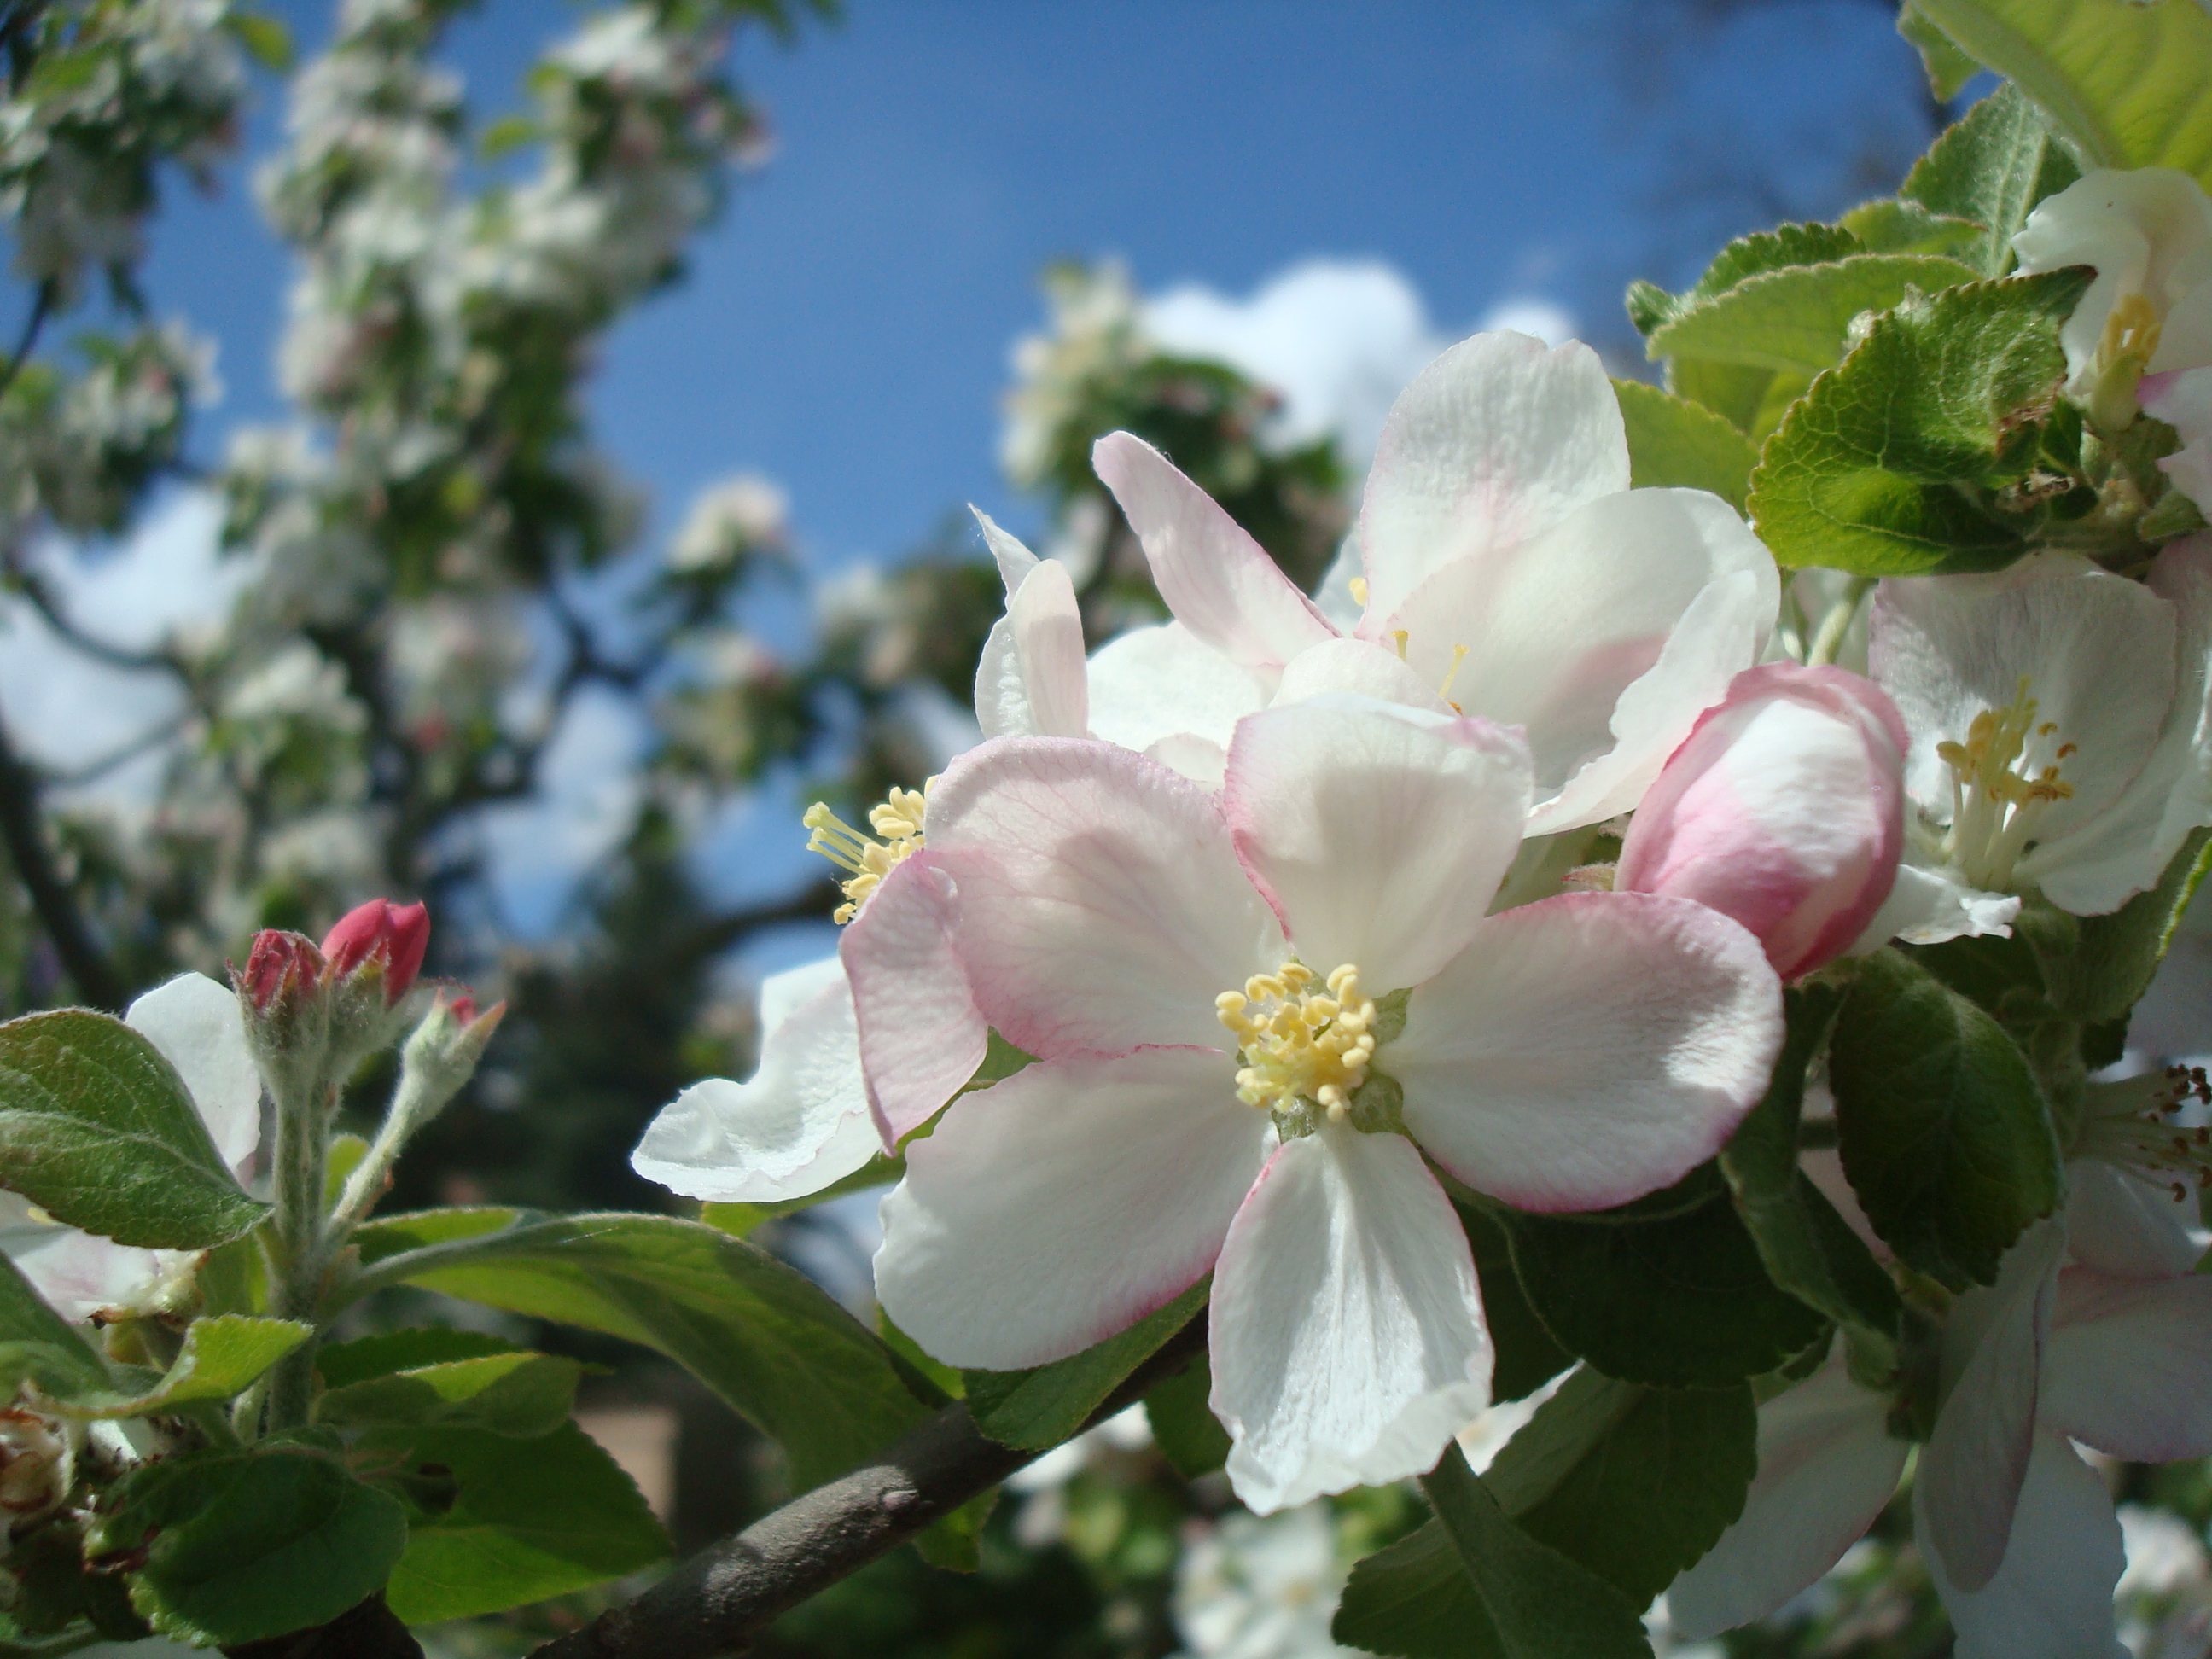 File:Apfelbaum Blüte.JPG - Wikimedia Commons